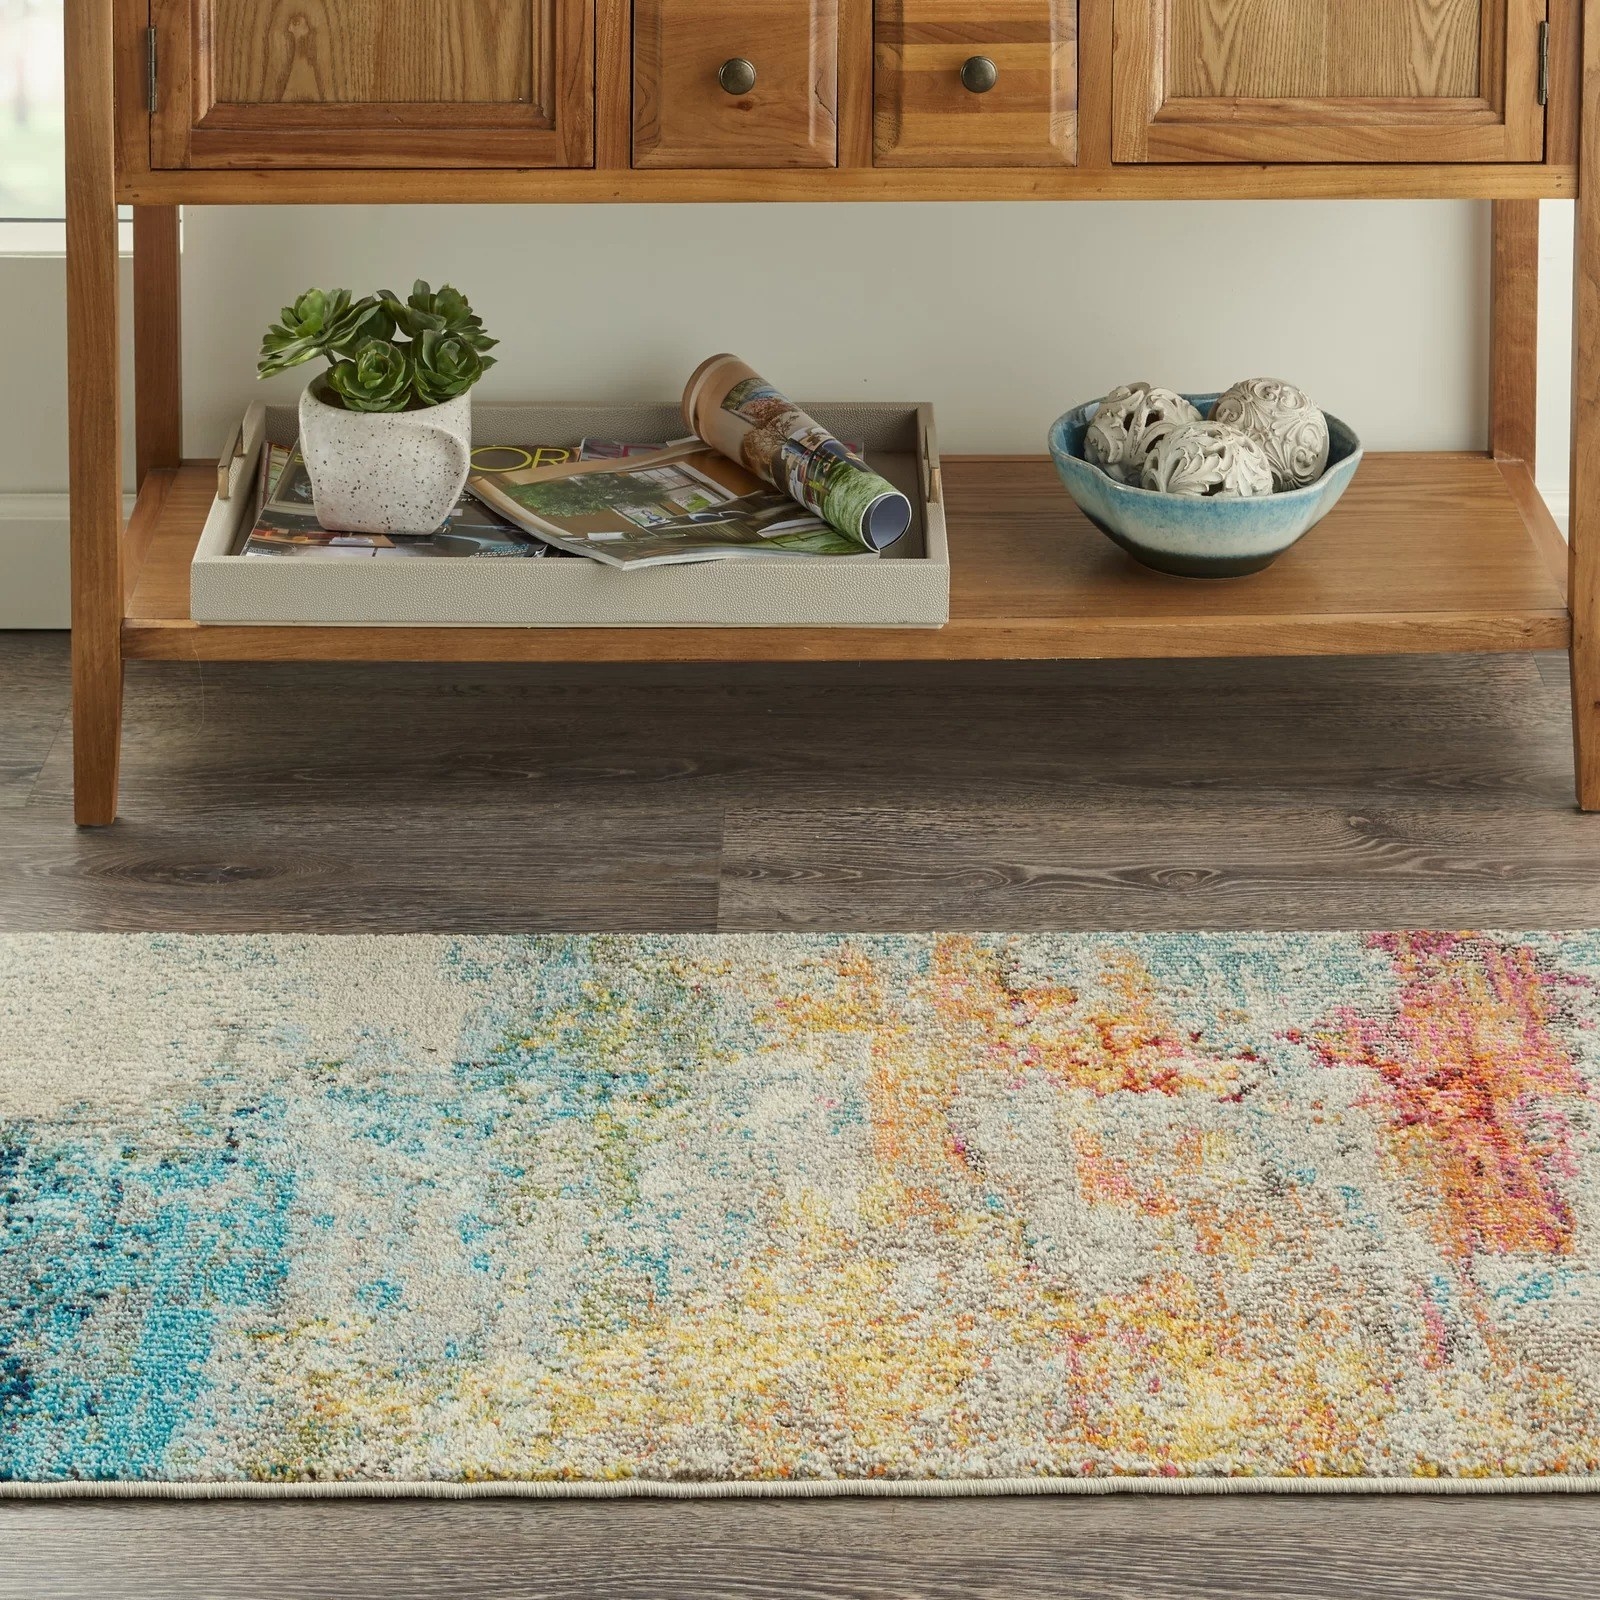 Colorful loom rug on the floor